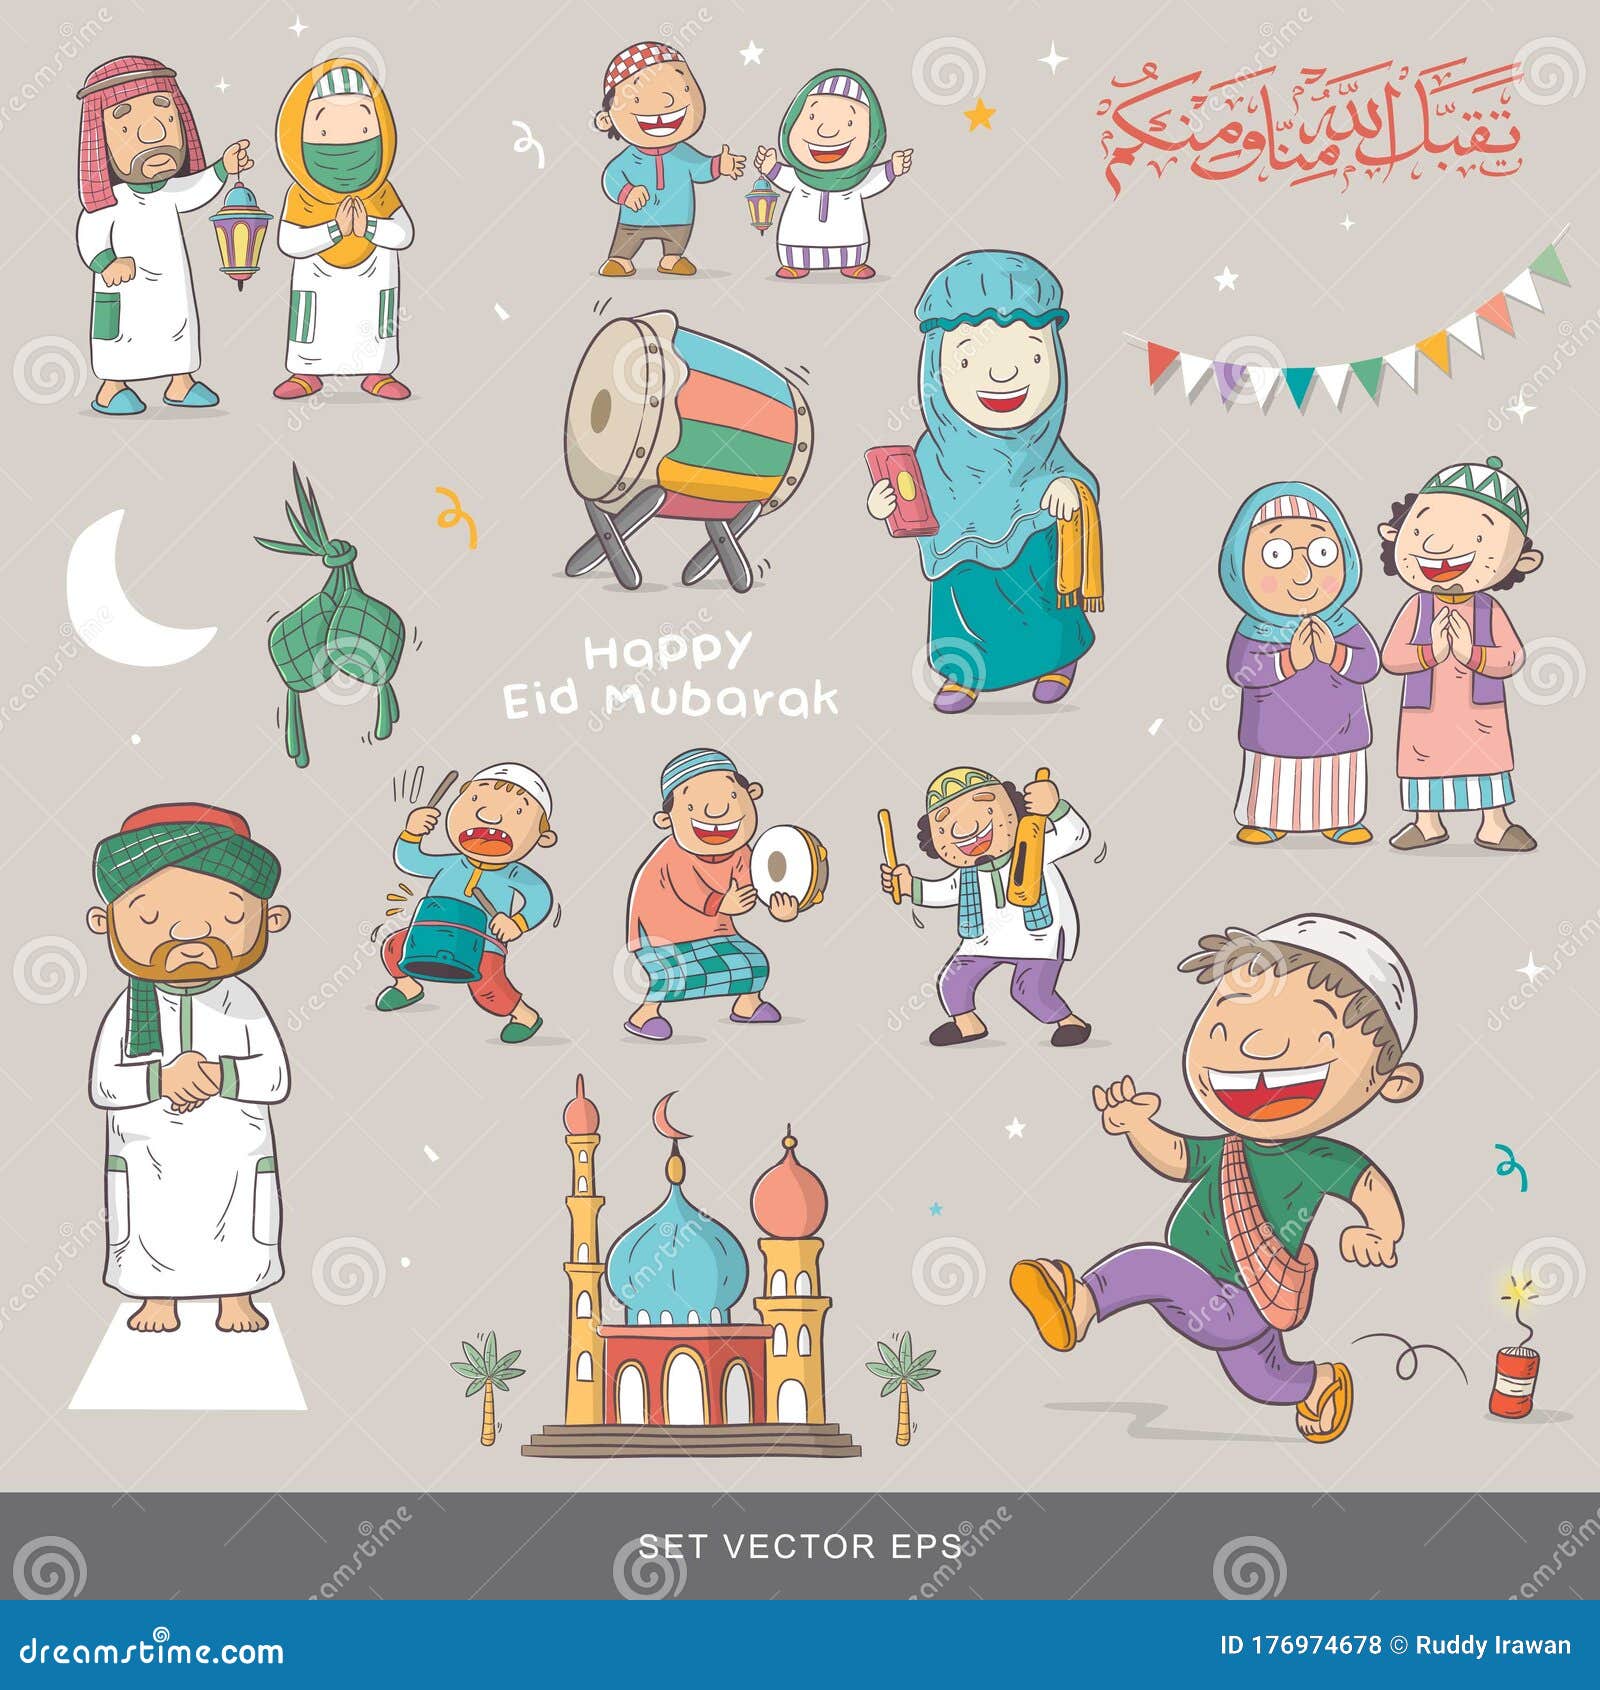 Happy Eid Mubarak Cartoon Vector Stock Vector - Illustration of children,  arabic: 176974678